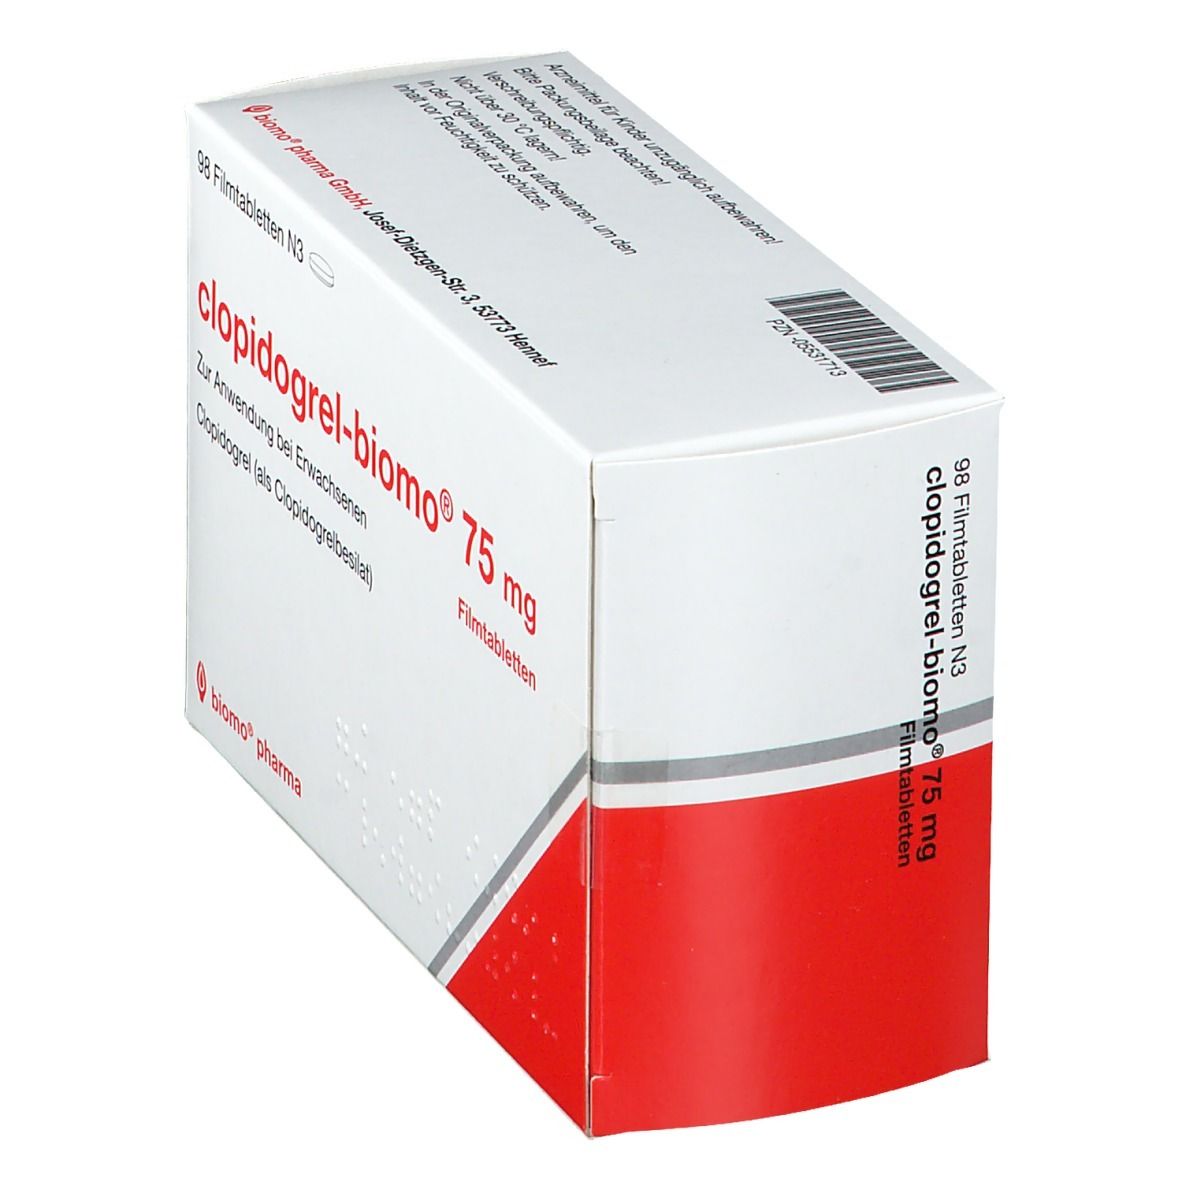 clopidogrel-biomo® 75 mg